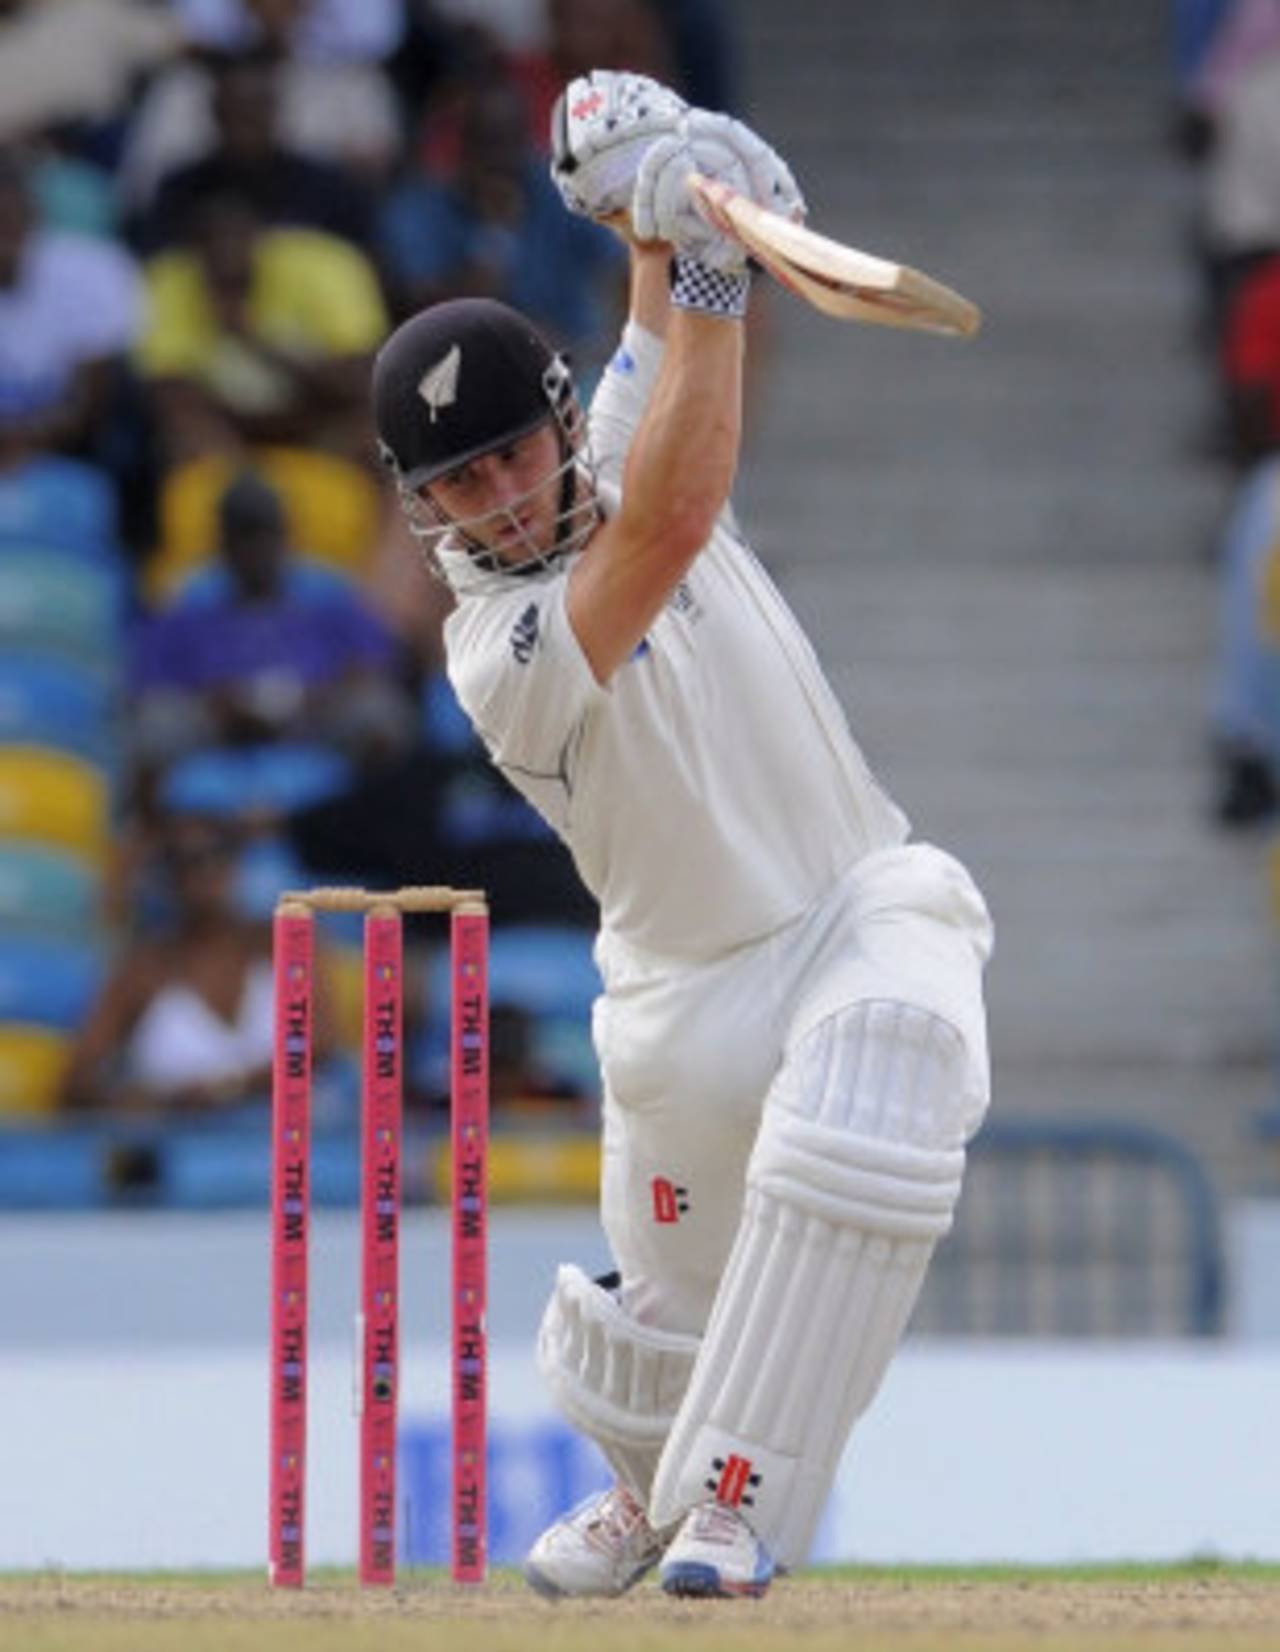 Kane Williamson drives, West Indies v New Zealand, 3rd Test, Bridgetown, 3rd day, June 28, 2014